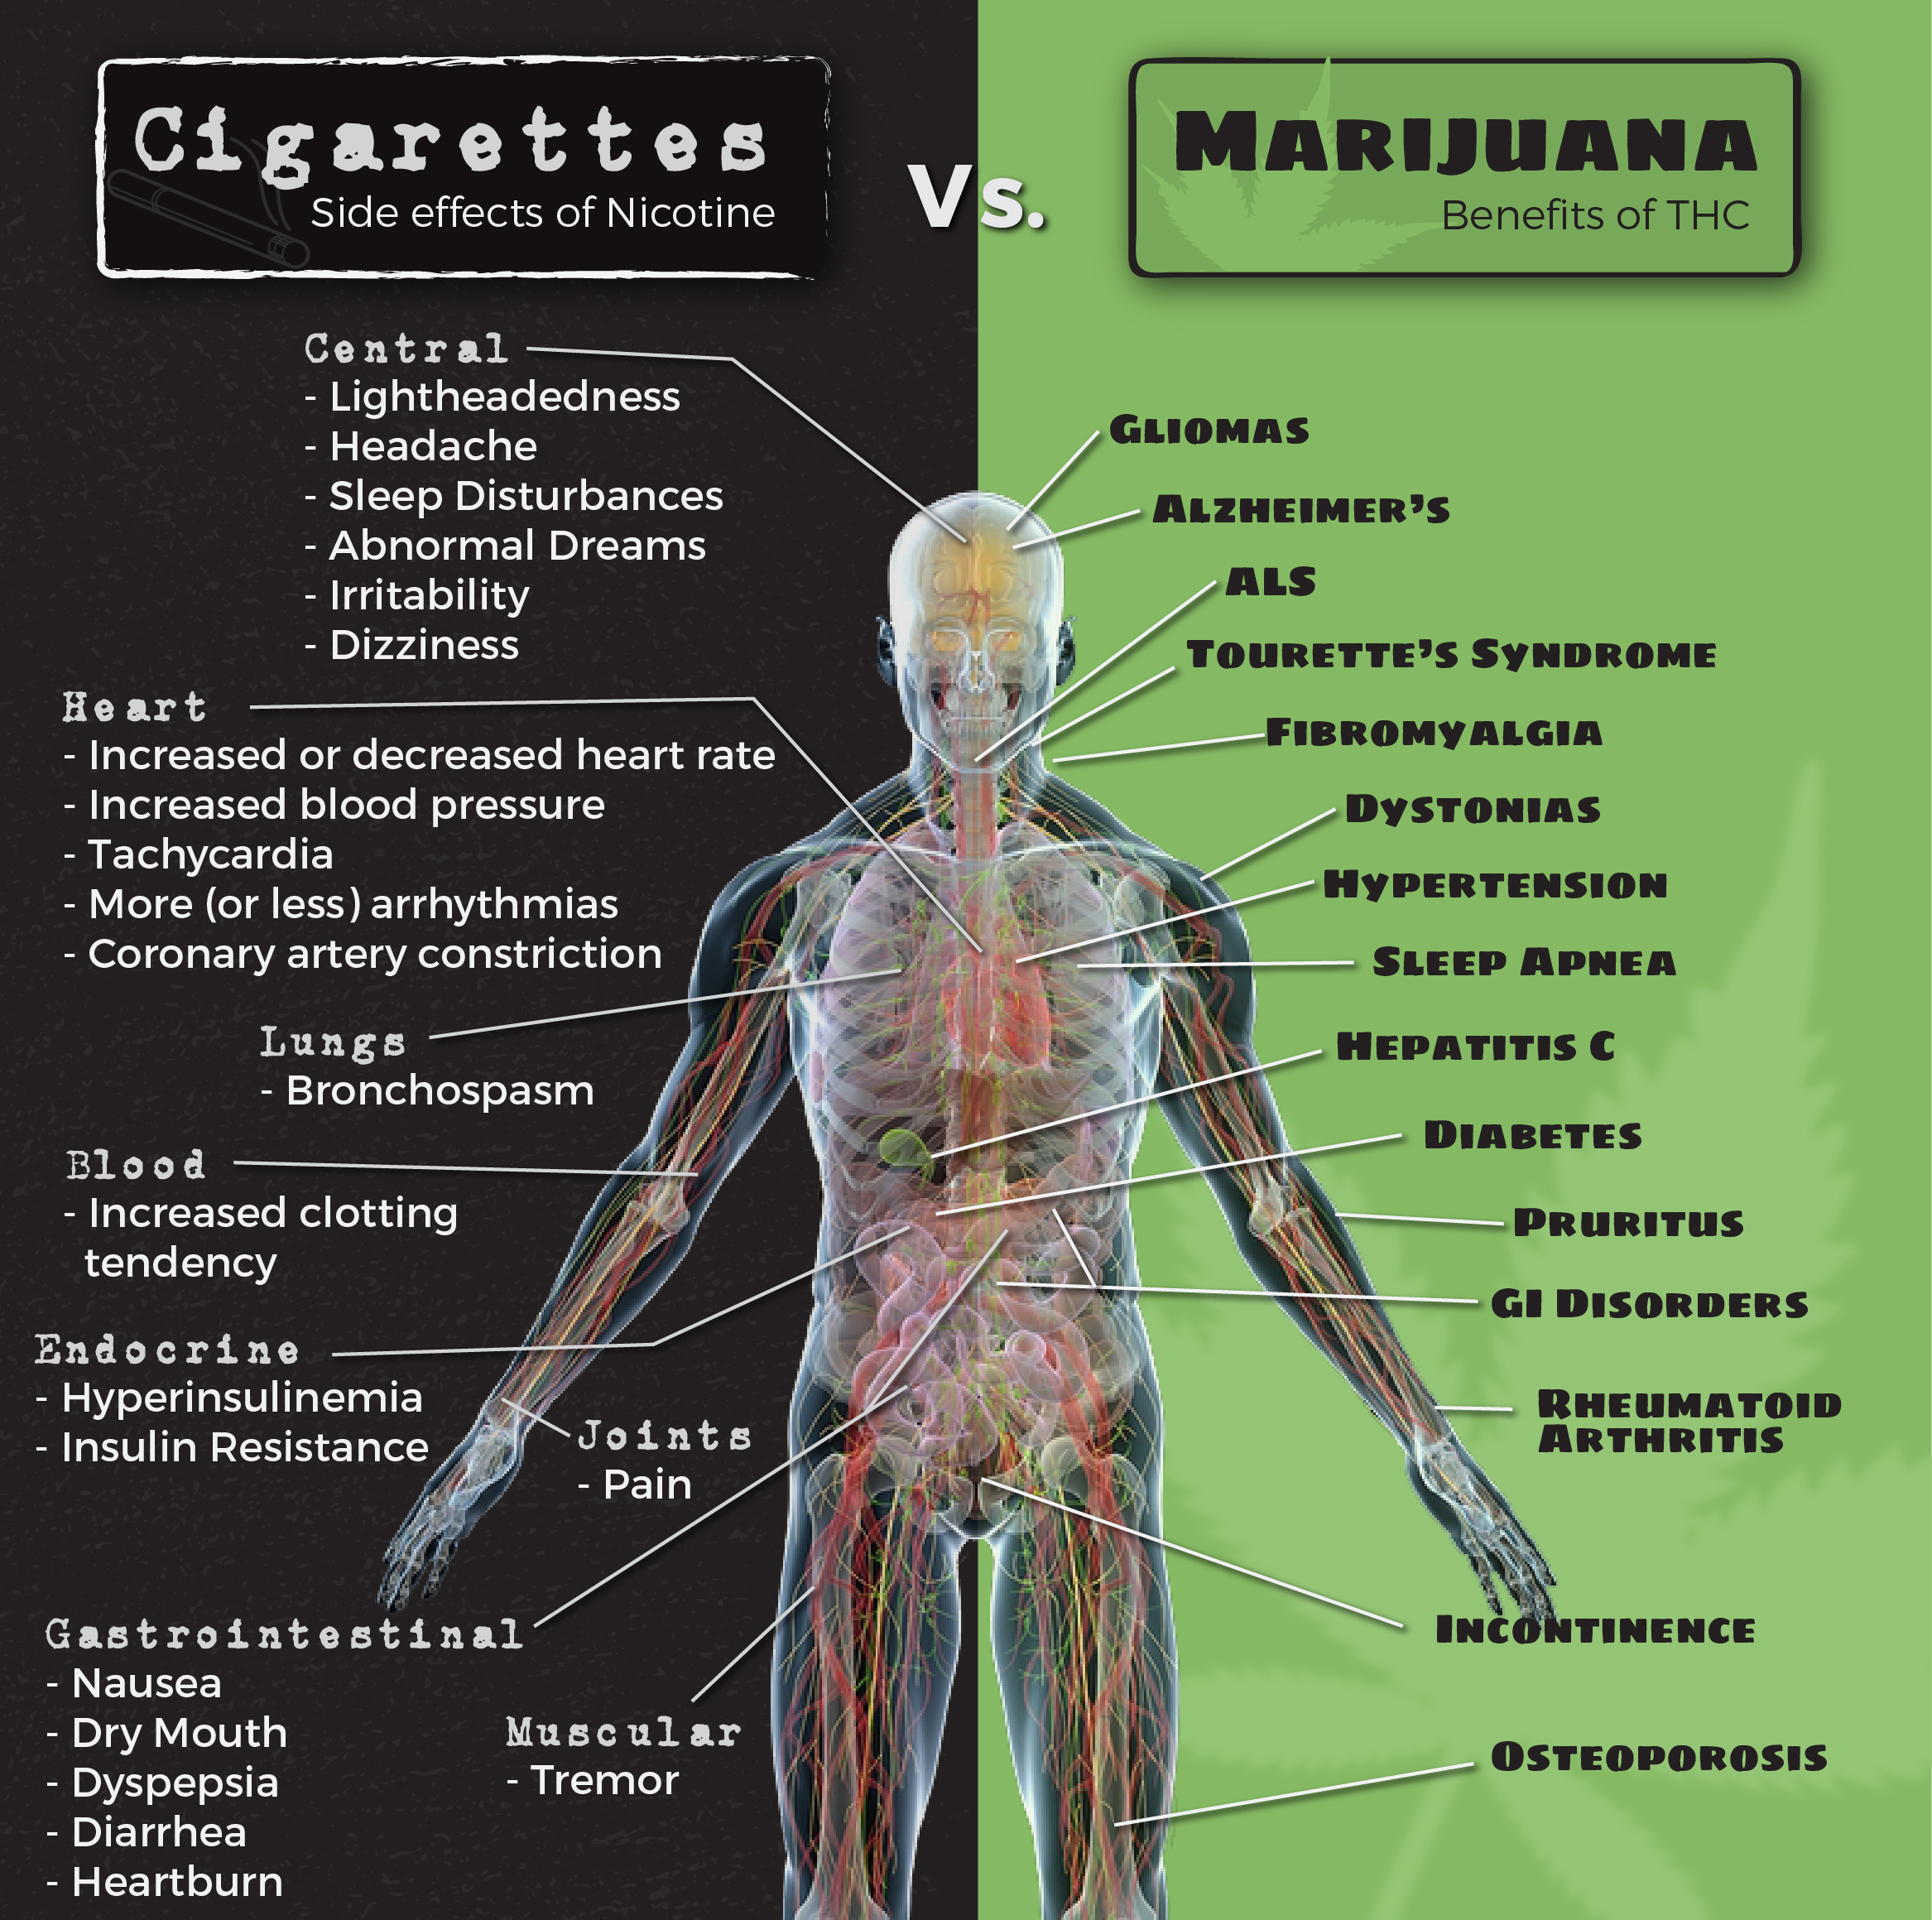 Cigarettes Vs. Marijuana Infographic